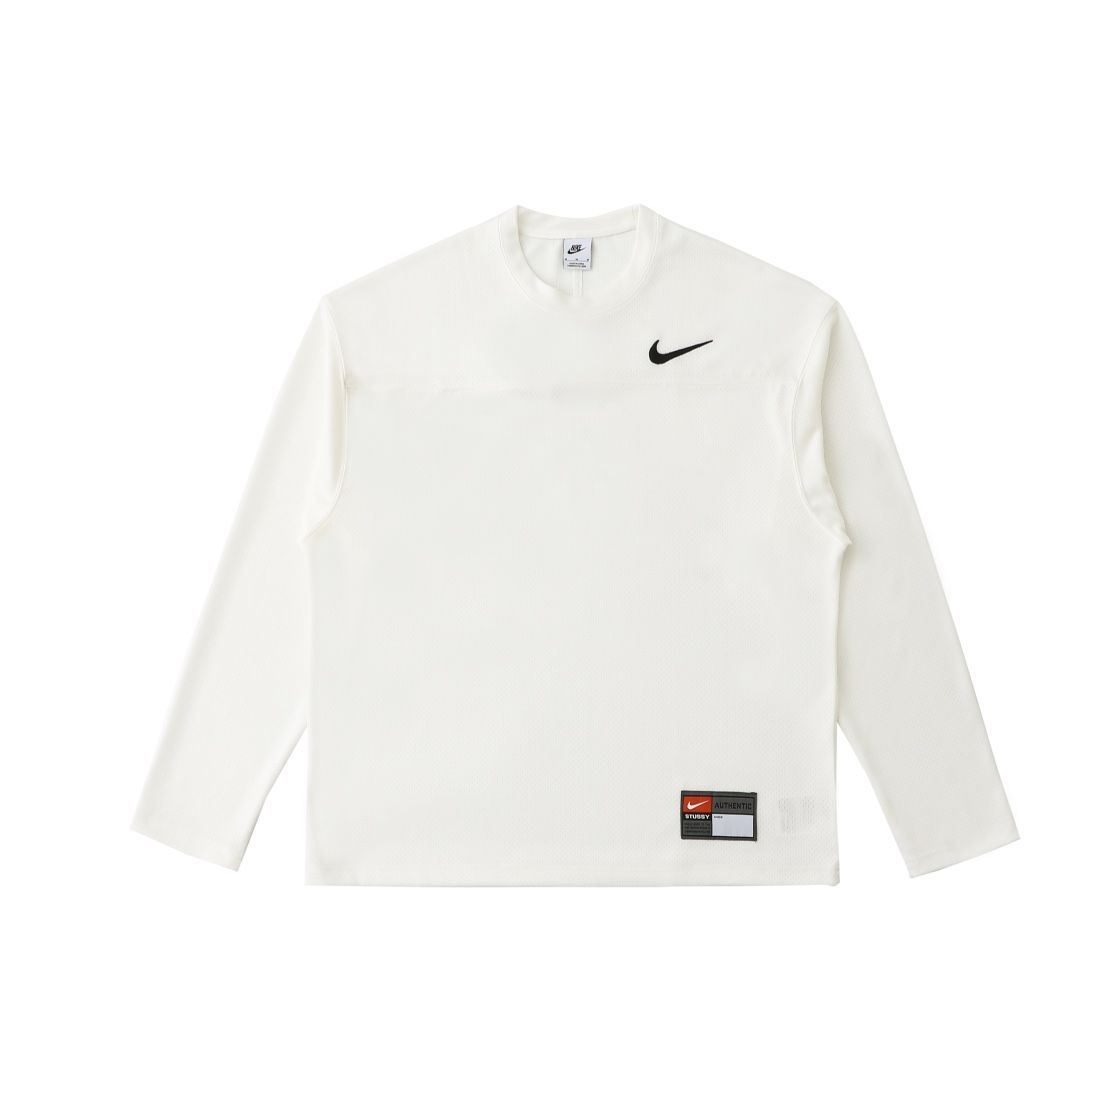 Nike x Stussy Long Sleeve Top White Lサイズ